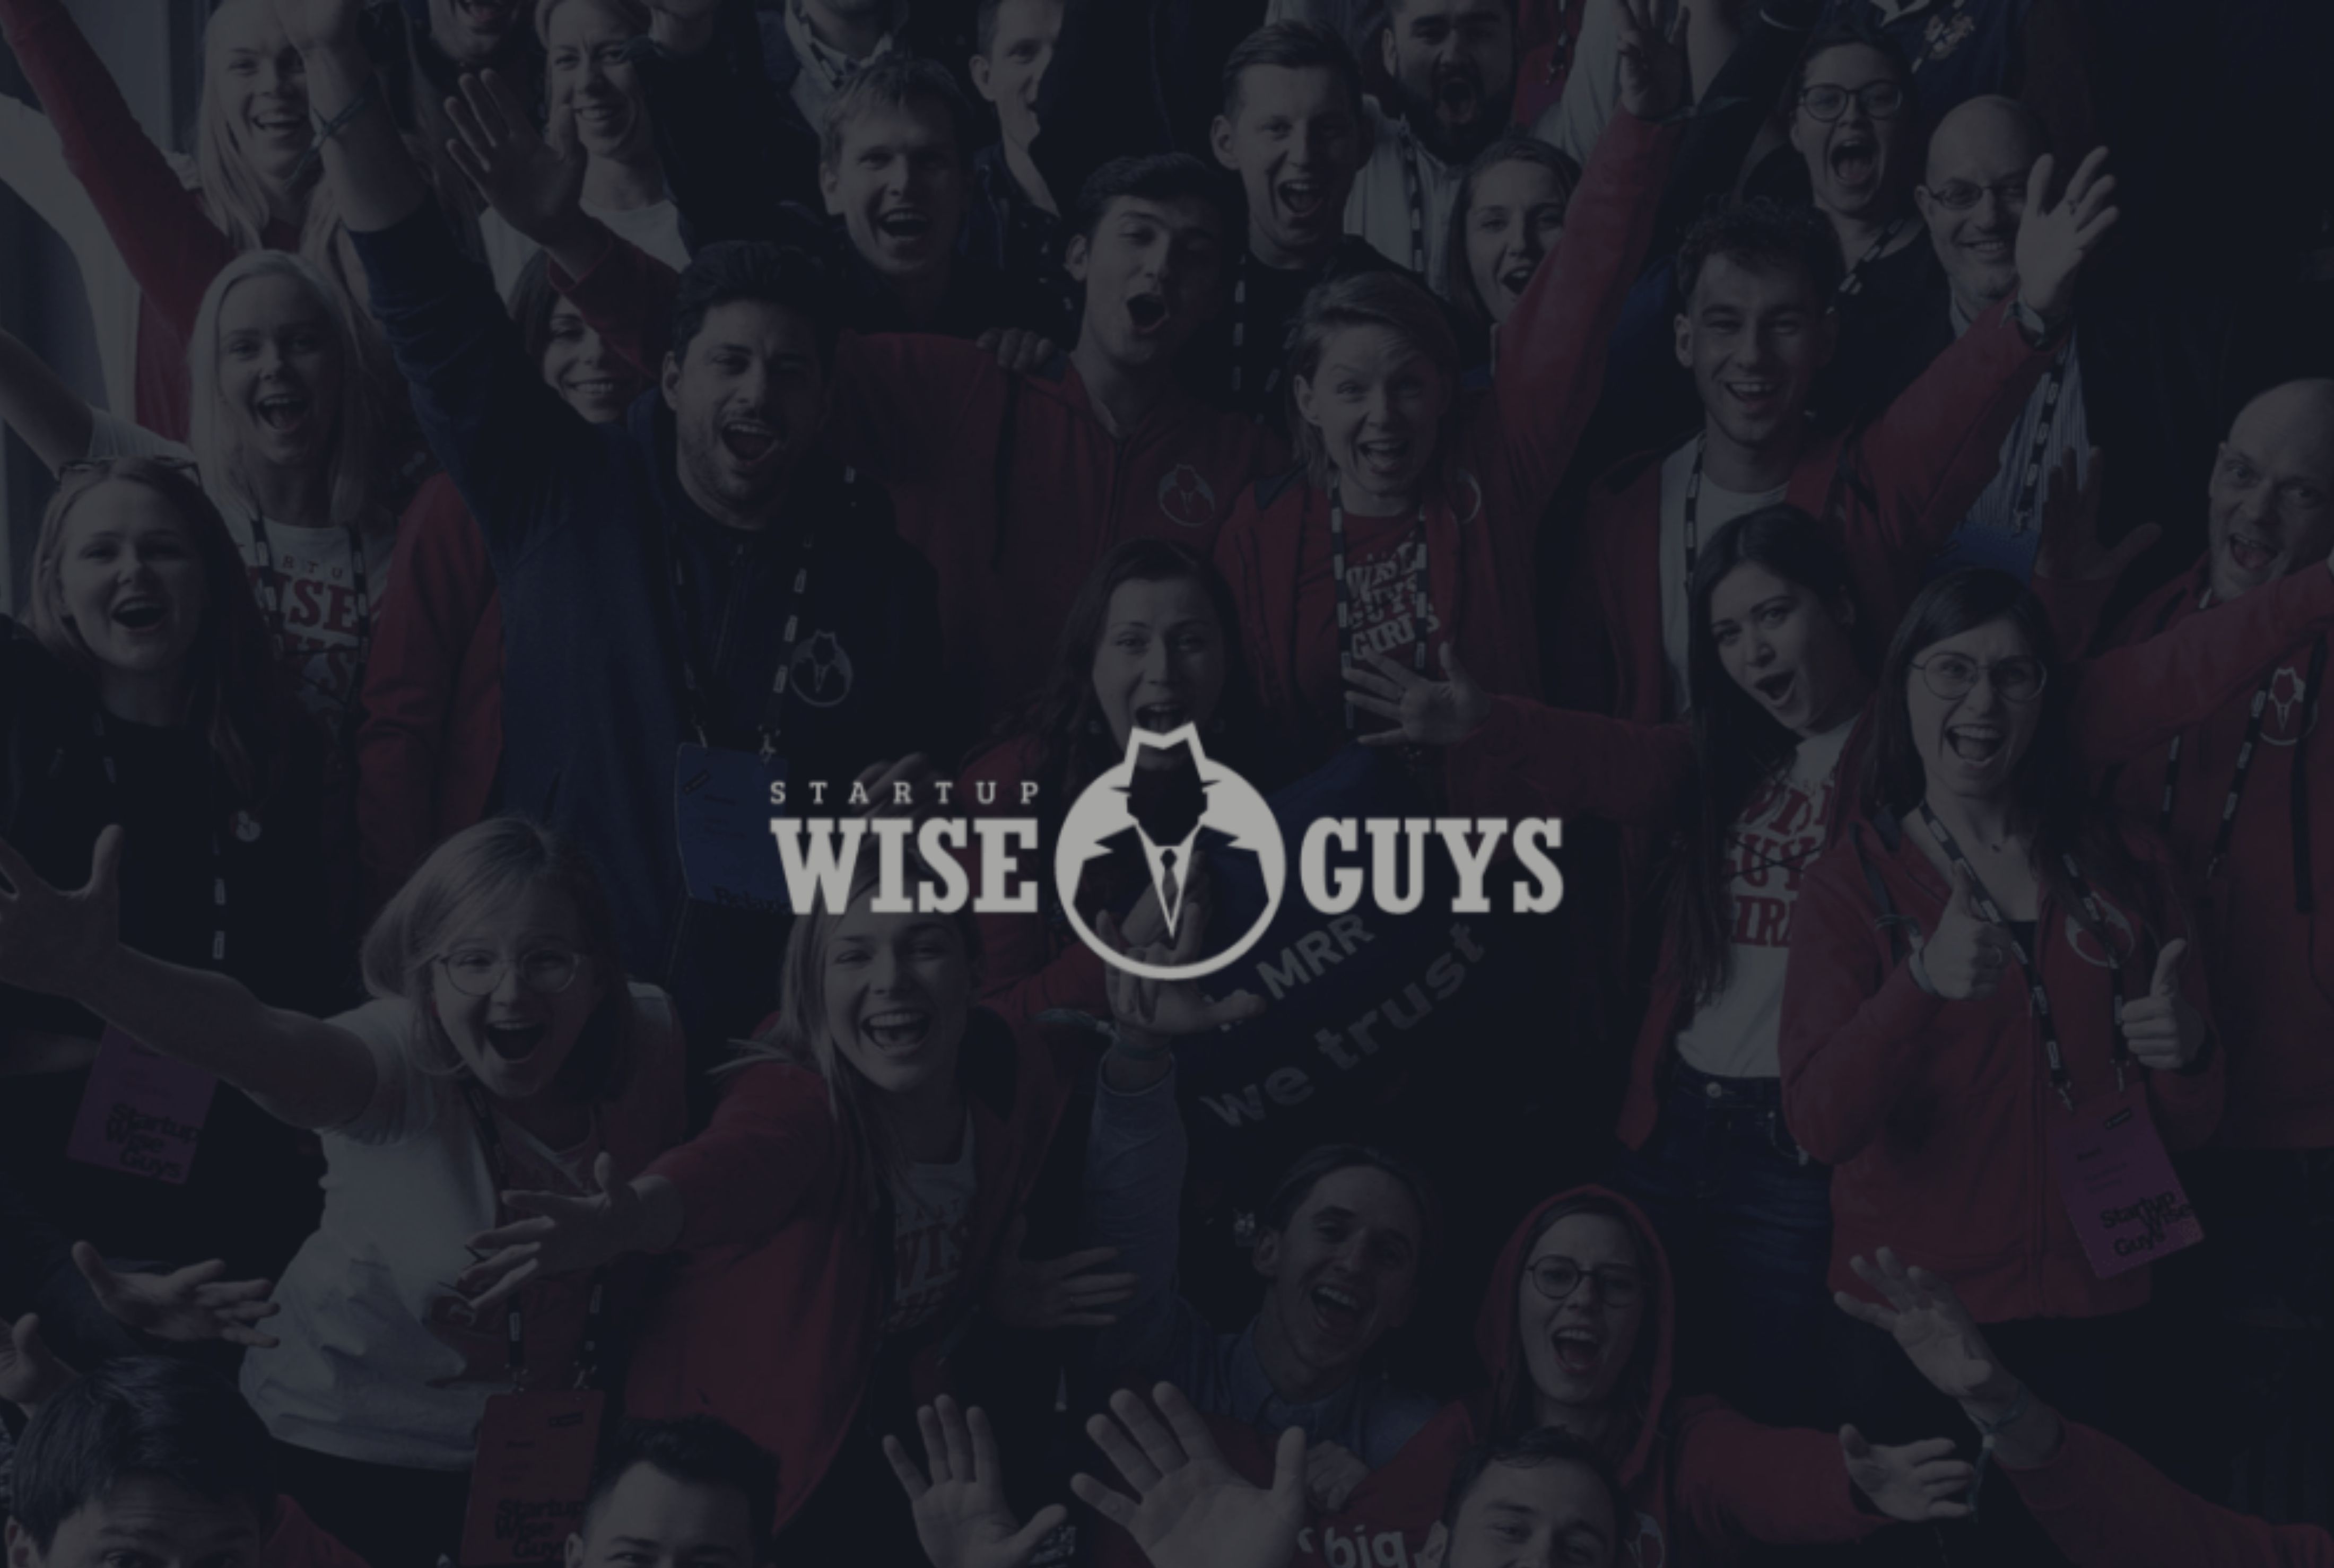 Türkiye - Startup Wise Guys